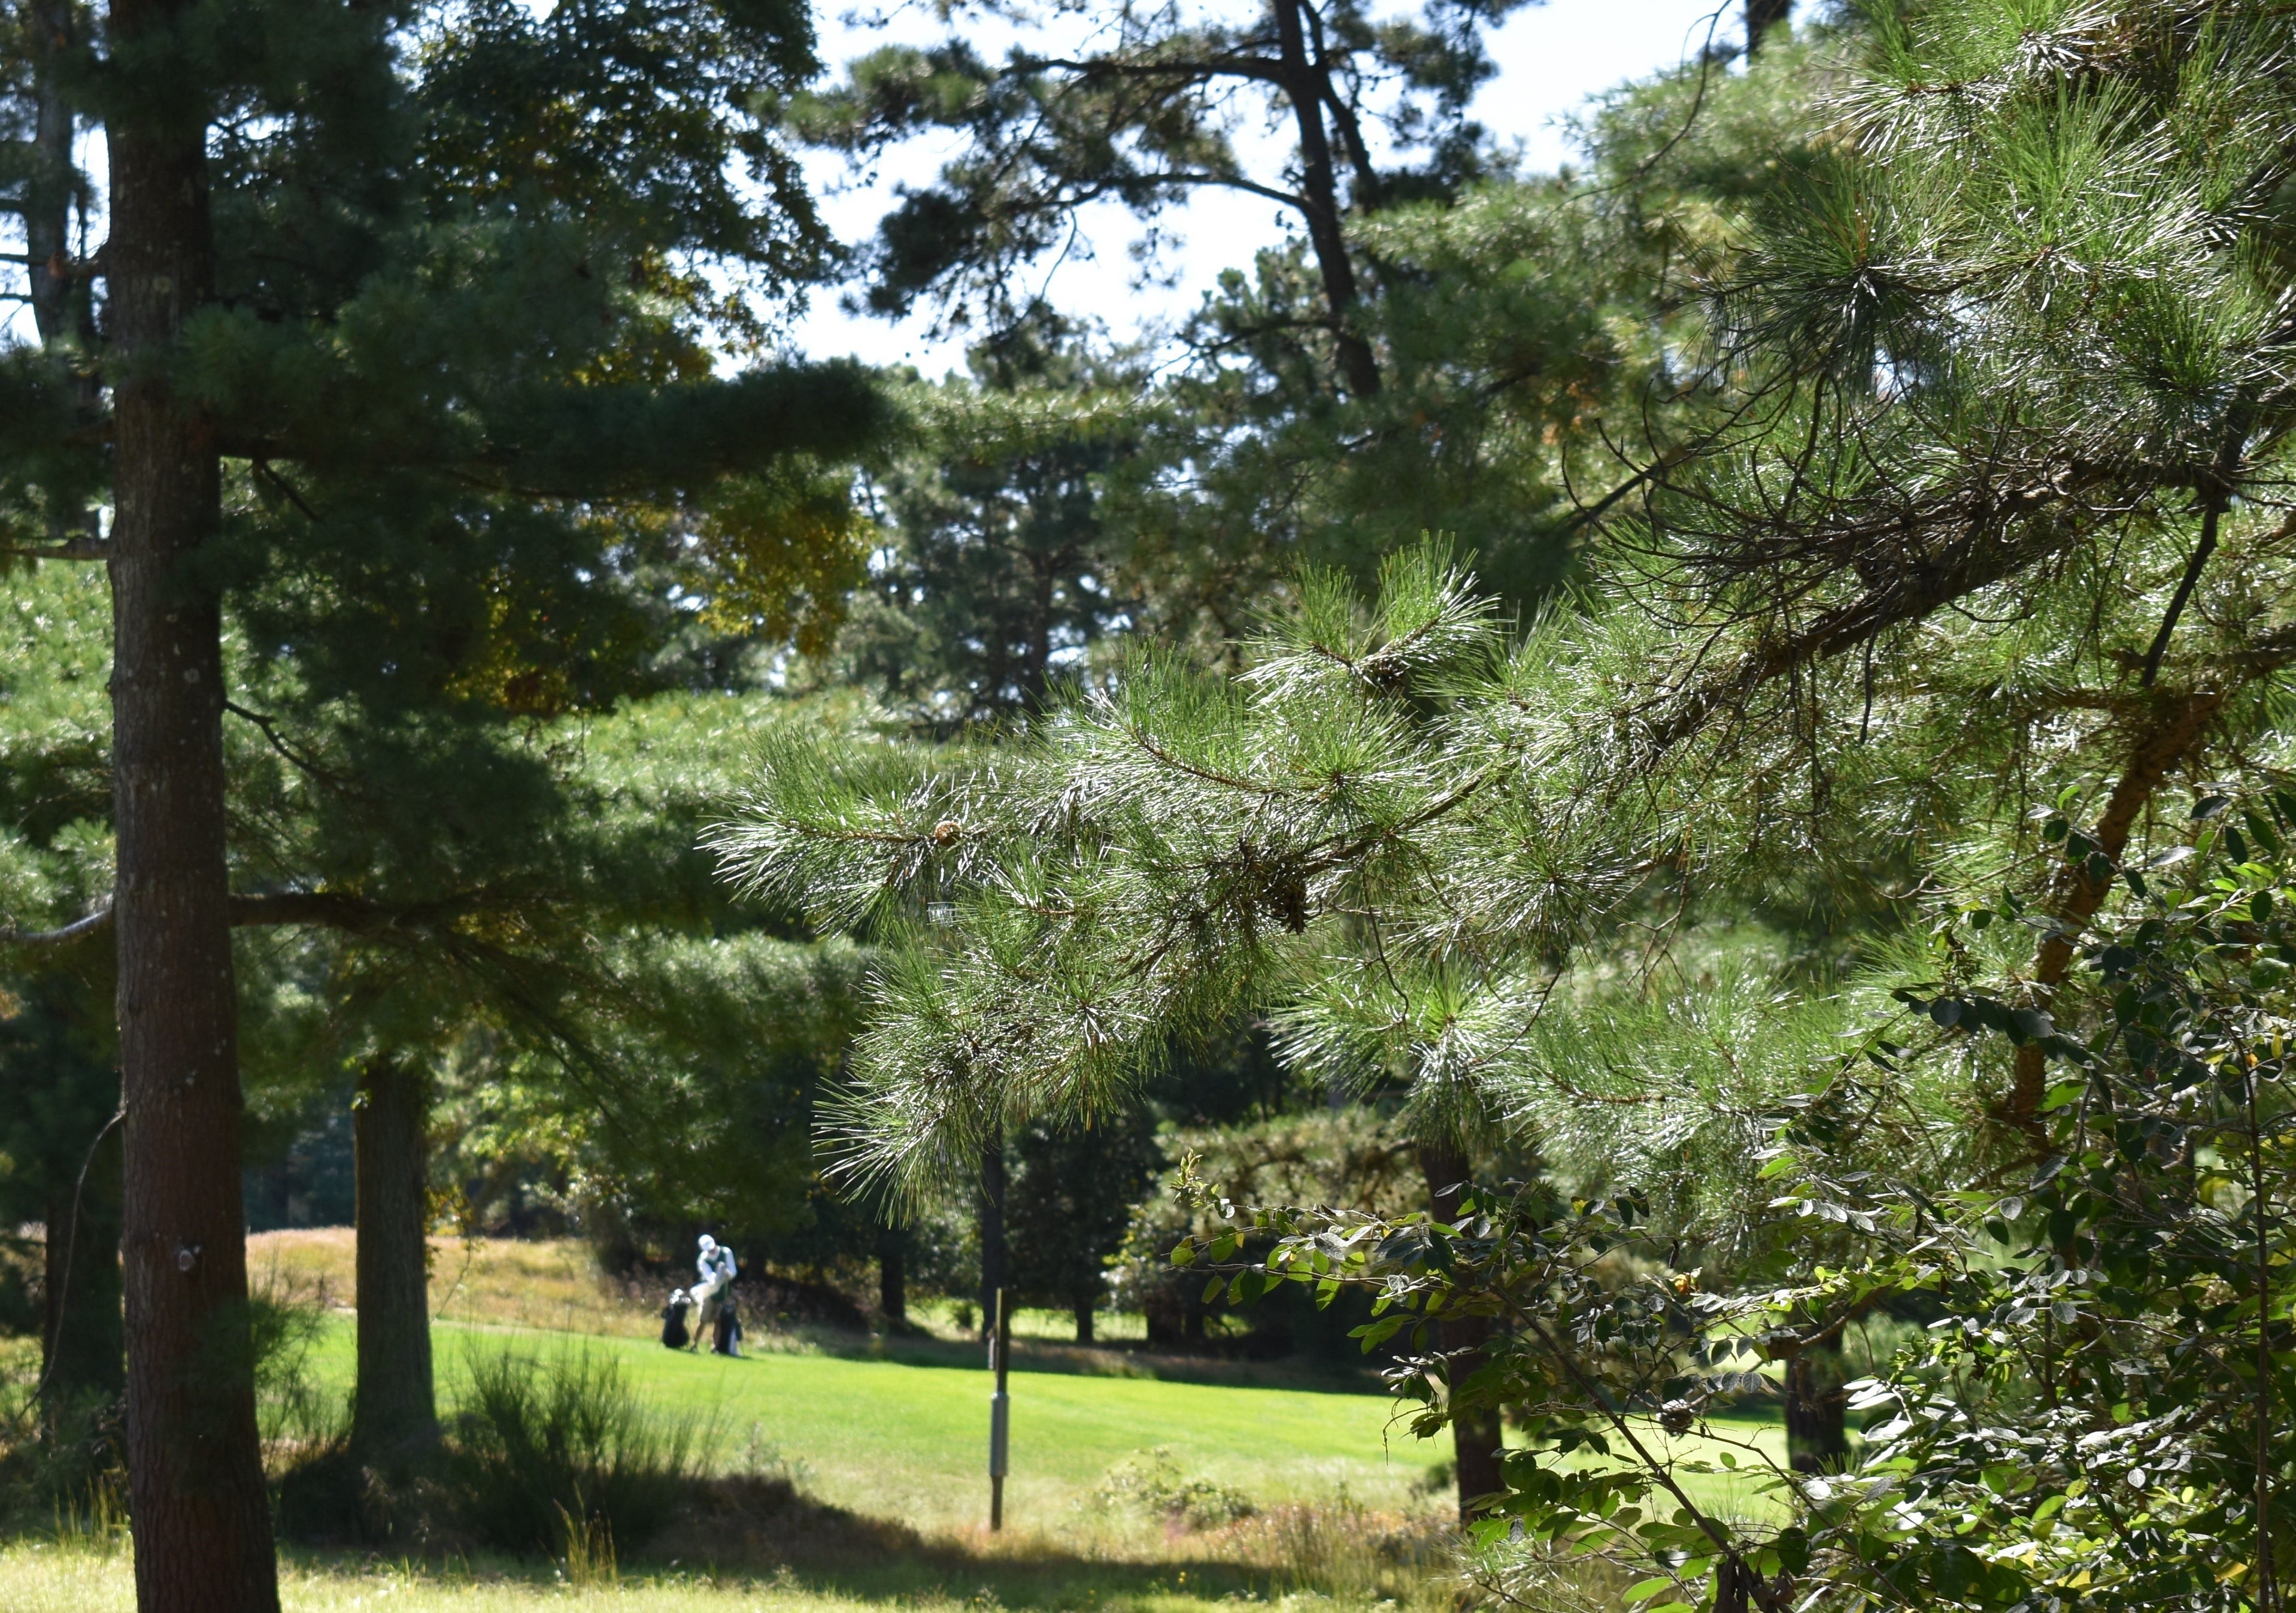 A golfer plays at Pine Valley Golf Club